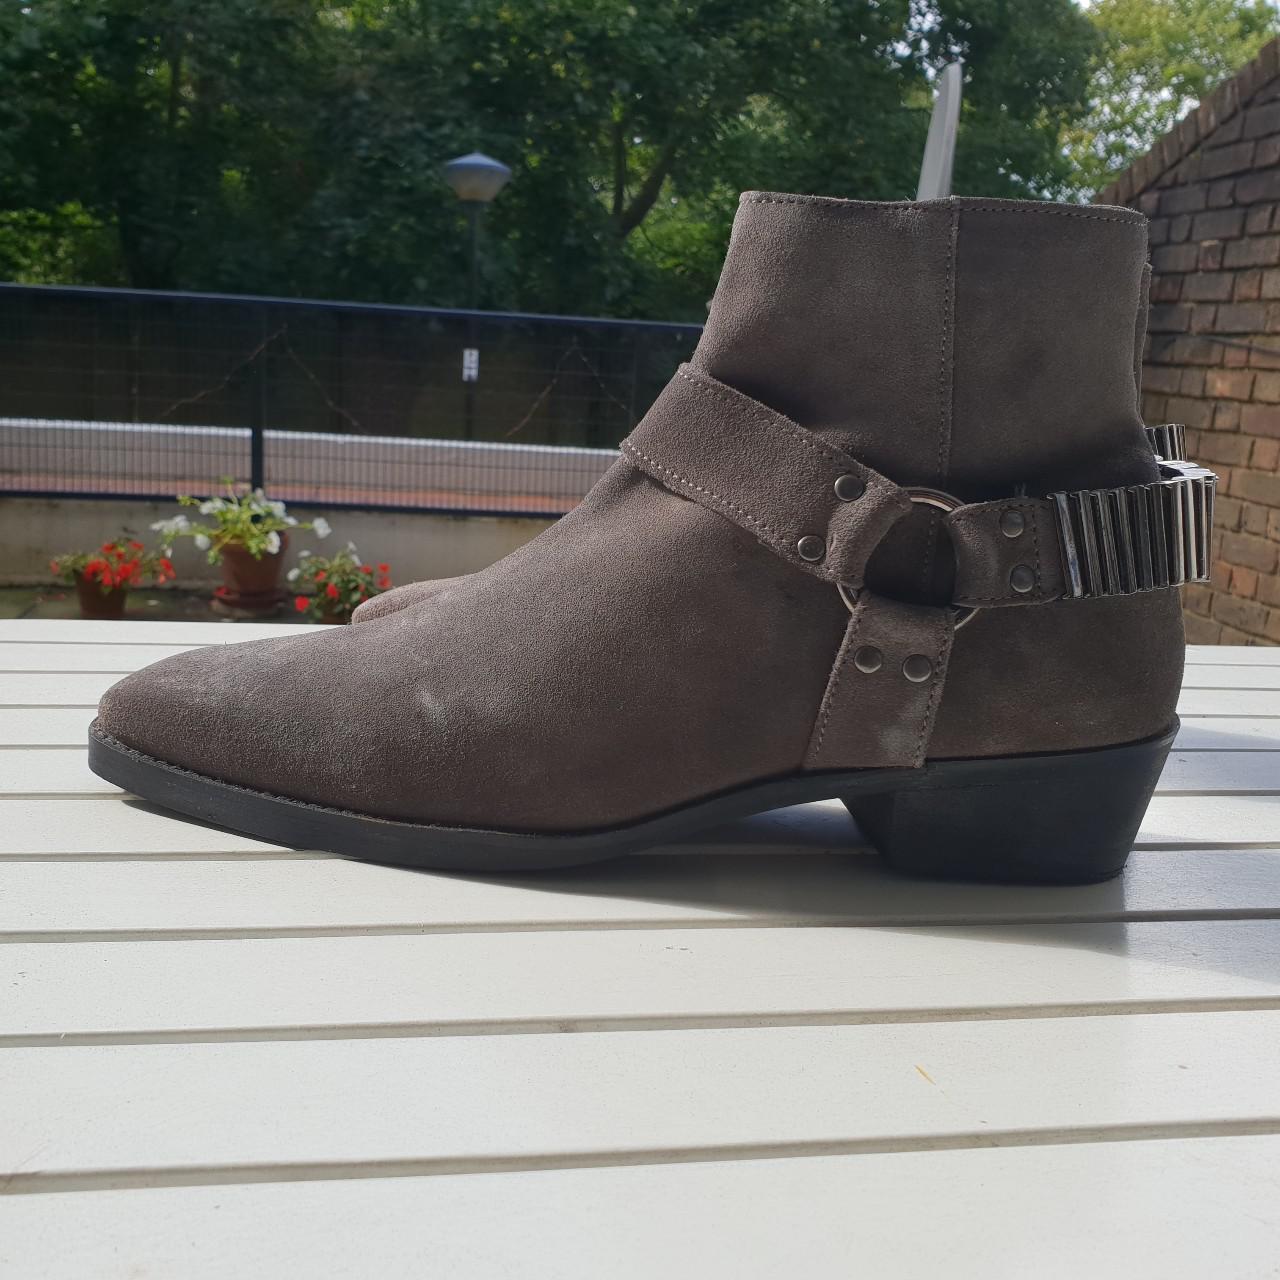 Product Image 3 - Brand new cuban heel cowboy